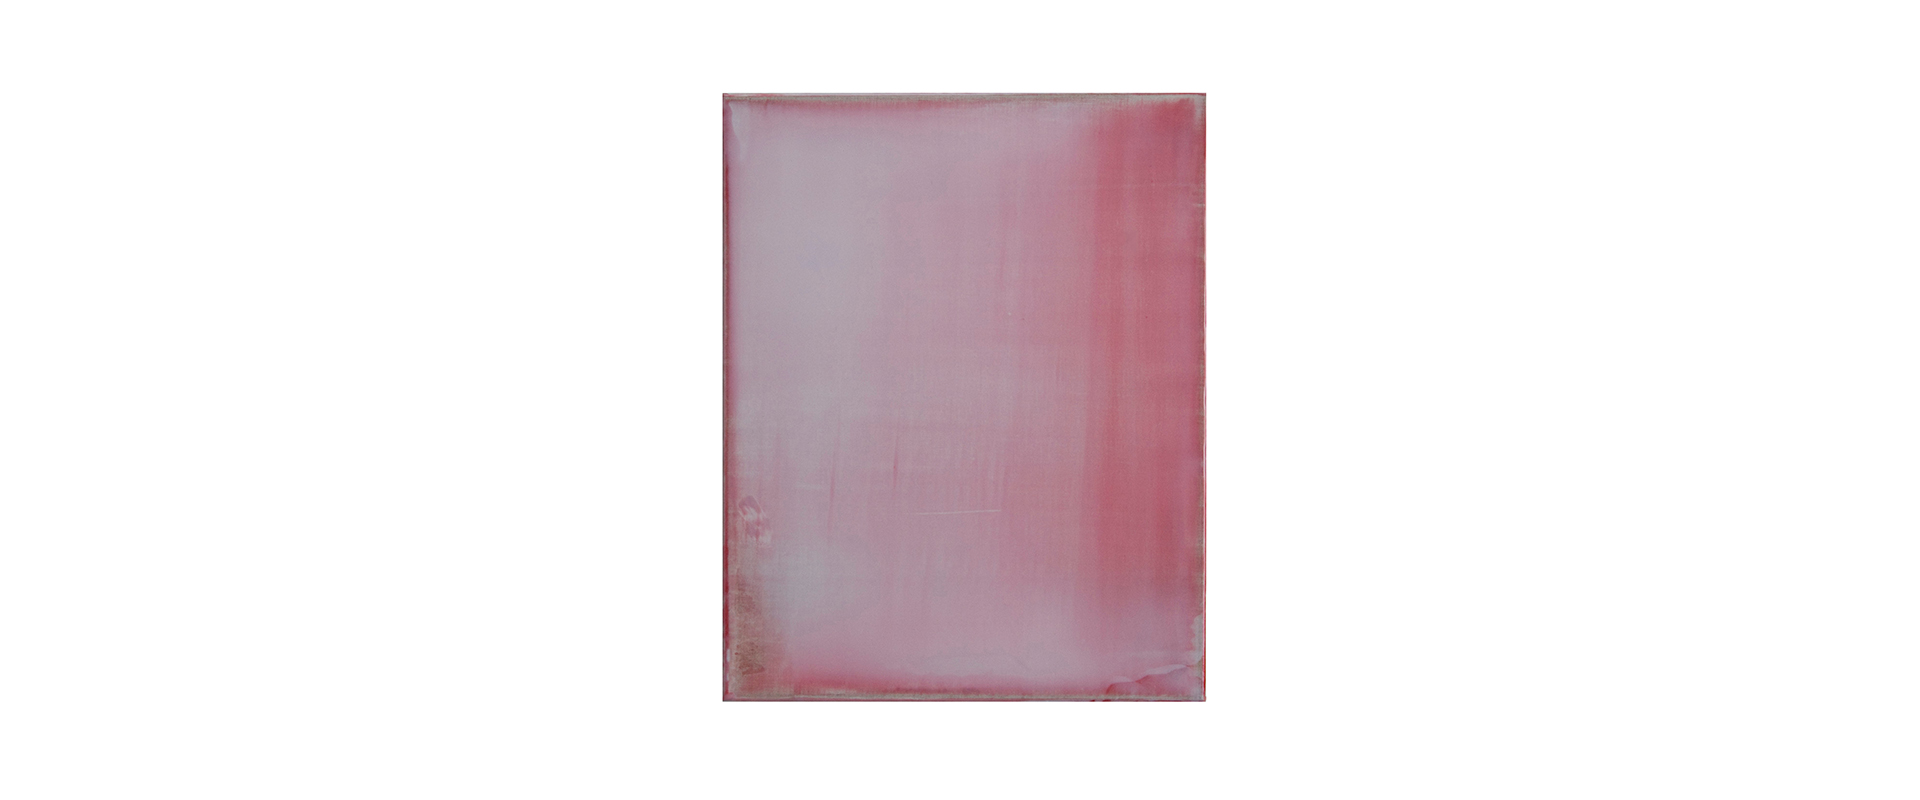 Jus Juchtmans, 20160207 – 2016, Acryl auf Leinwand, 50 x 40 cm